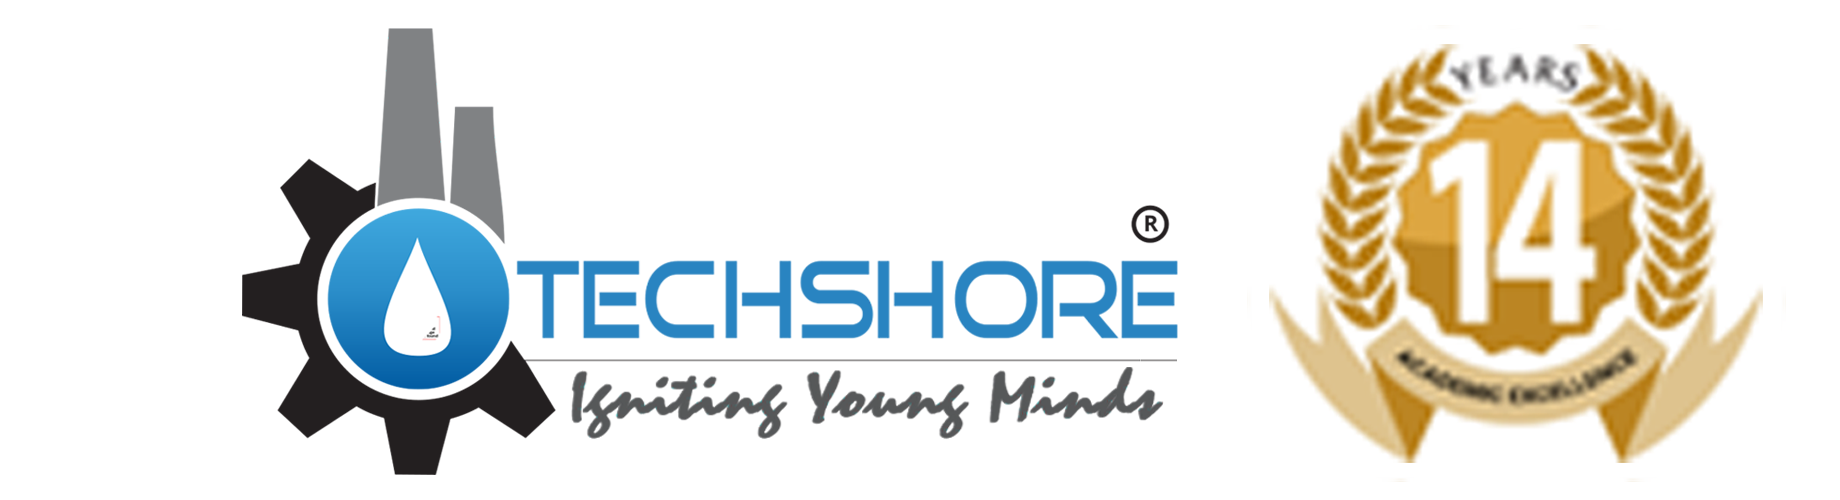 new logo- techshore